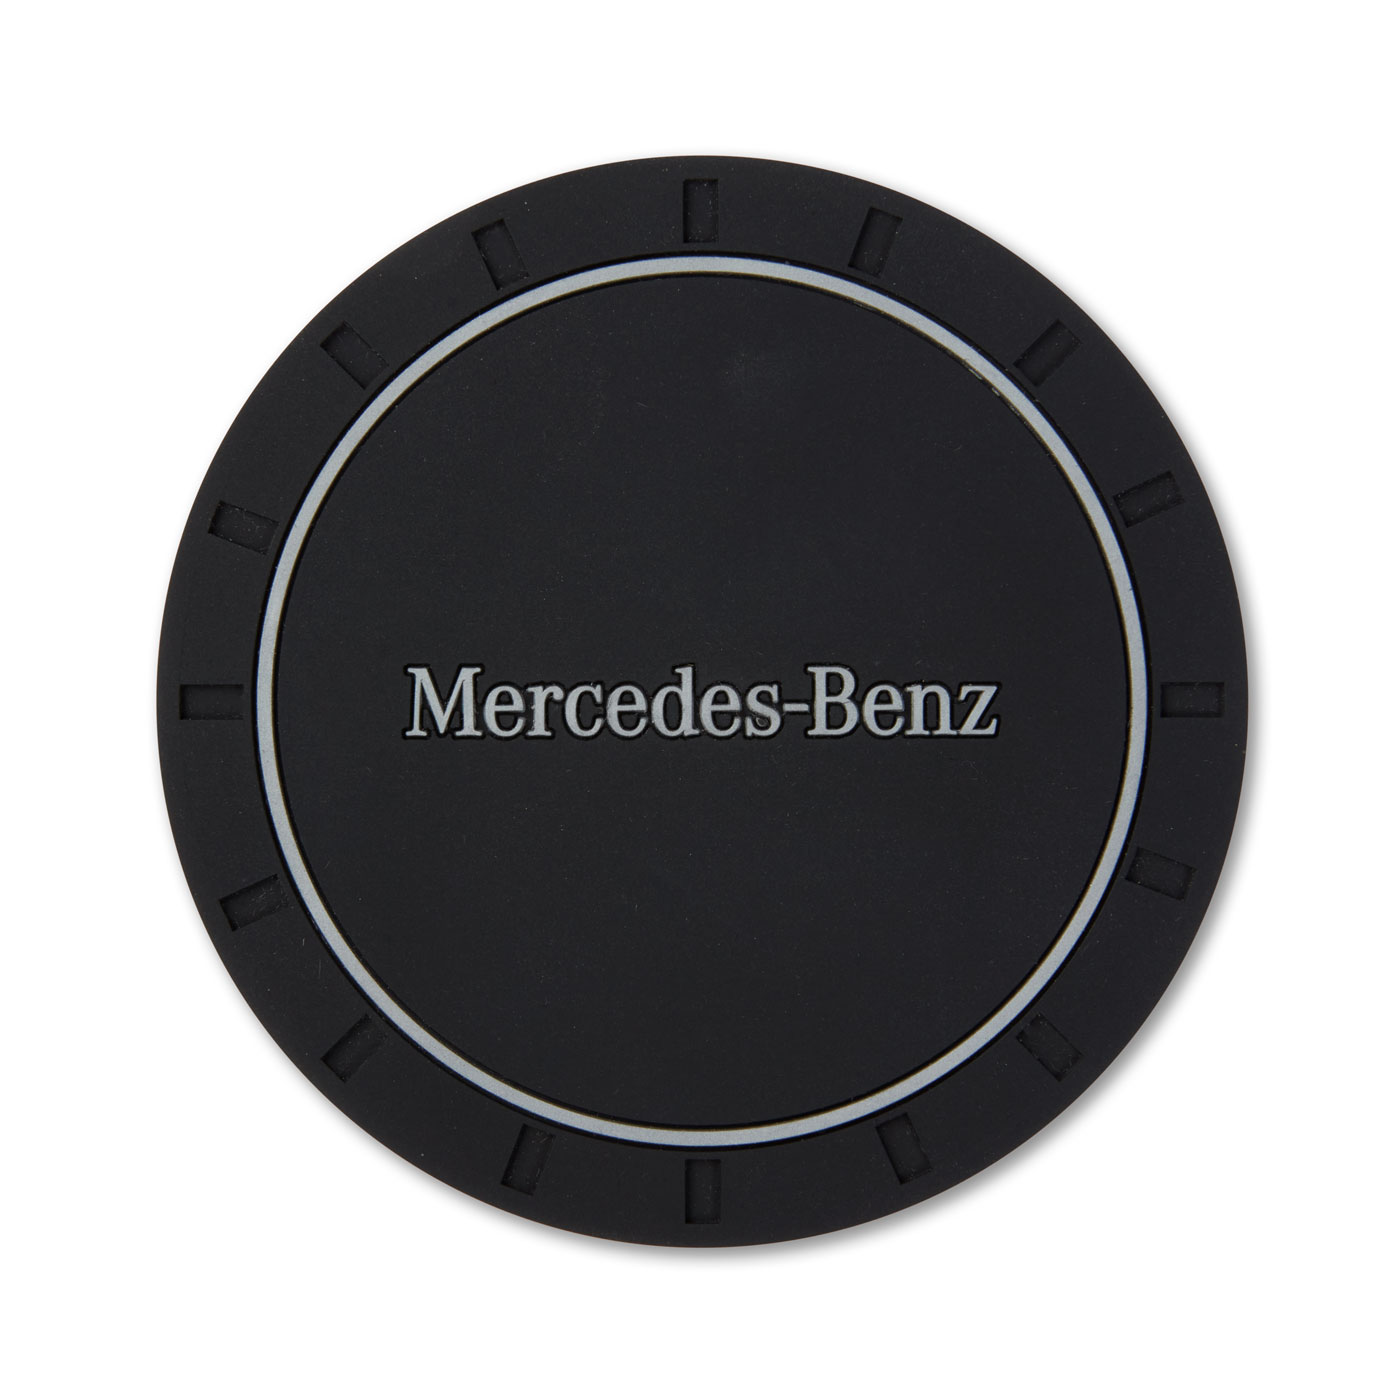 Customized Car Coasters for Mercedes-Benz Cars, LED Light Coasters, Acrylic  Coasters, Home Colorful Coasters - China Car Coasters and LED Coasters  price